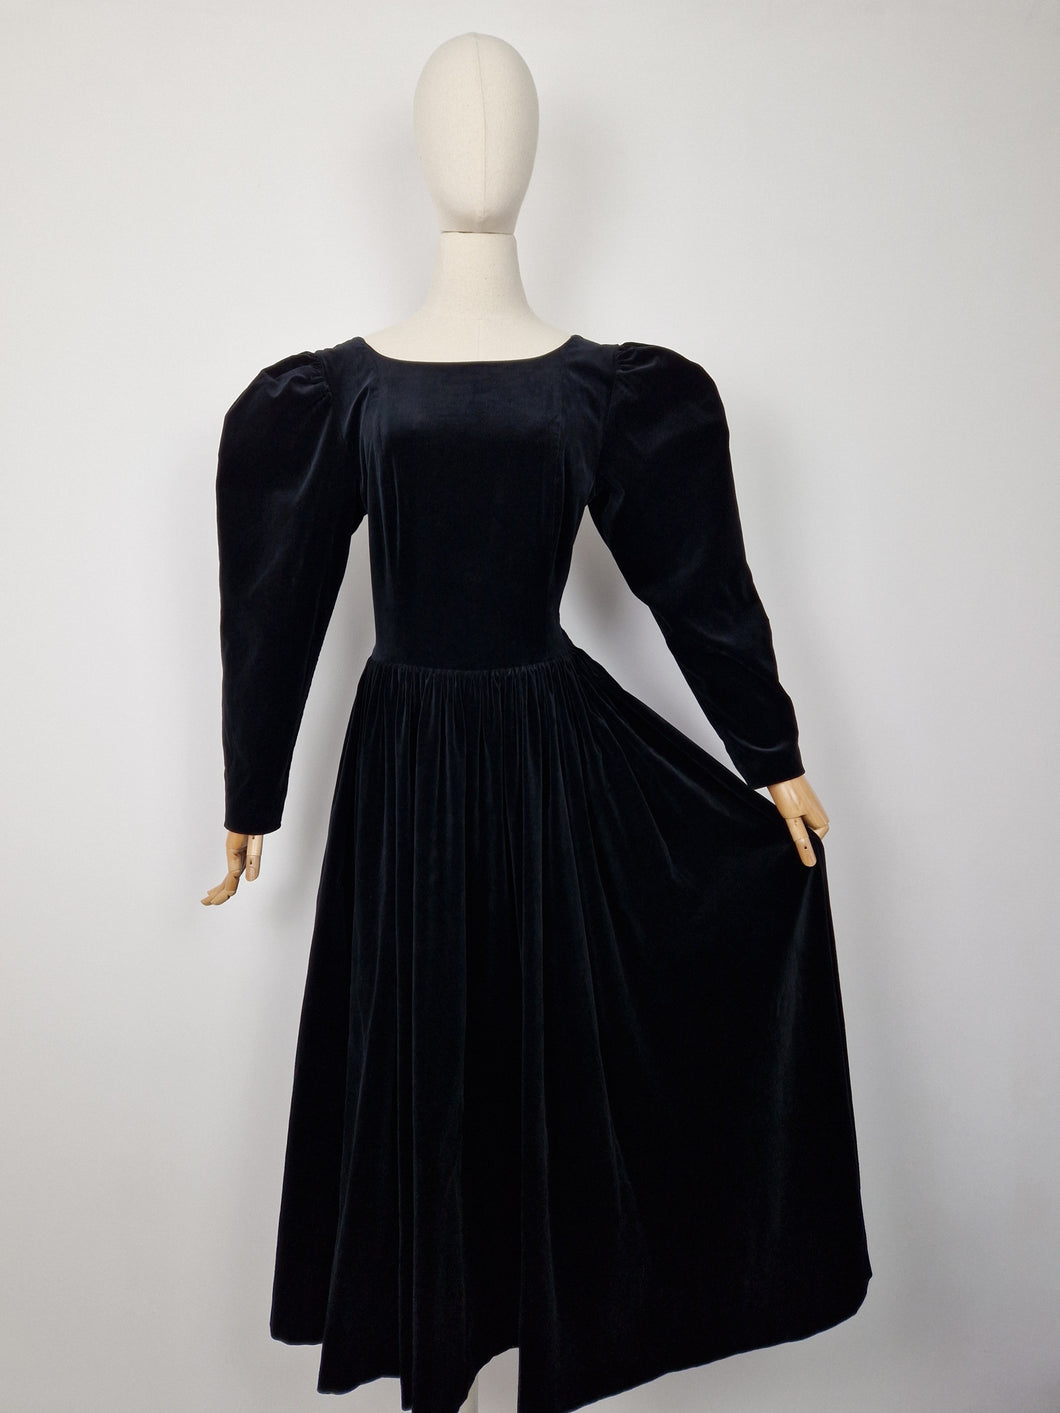 Vintage 80s Laura Ashley gothic velvet dress